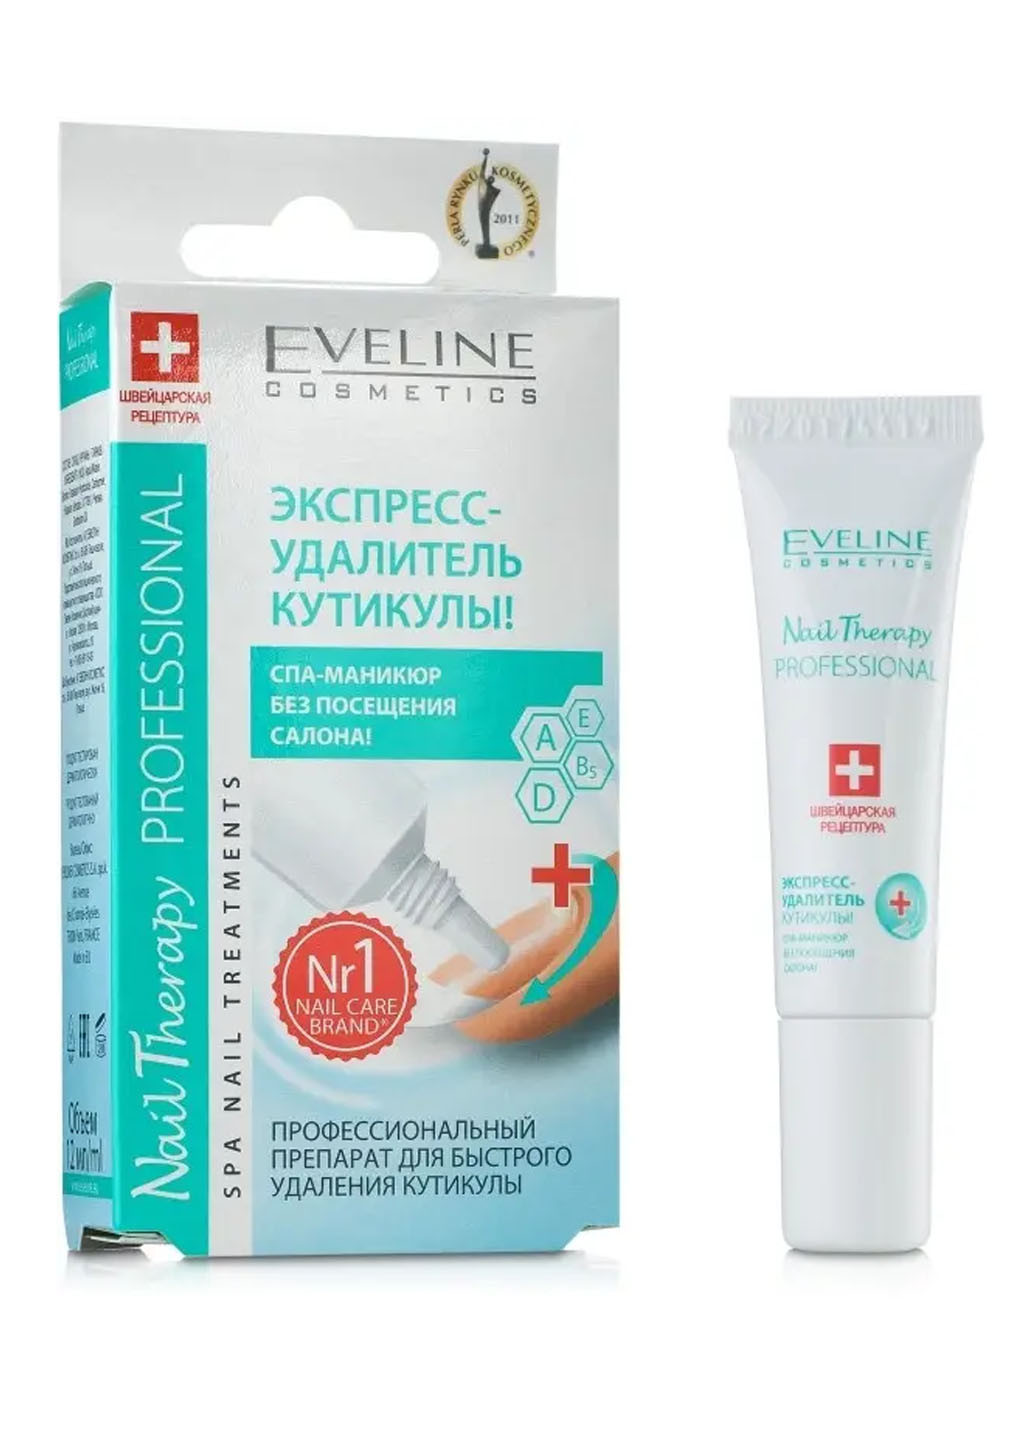 Экспресс-удалитель кутикулы Eveline Nail Therapy Profession 12ml Eveline Cosmetics 5907609333506 (260517147)